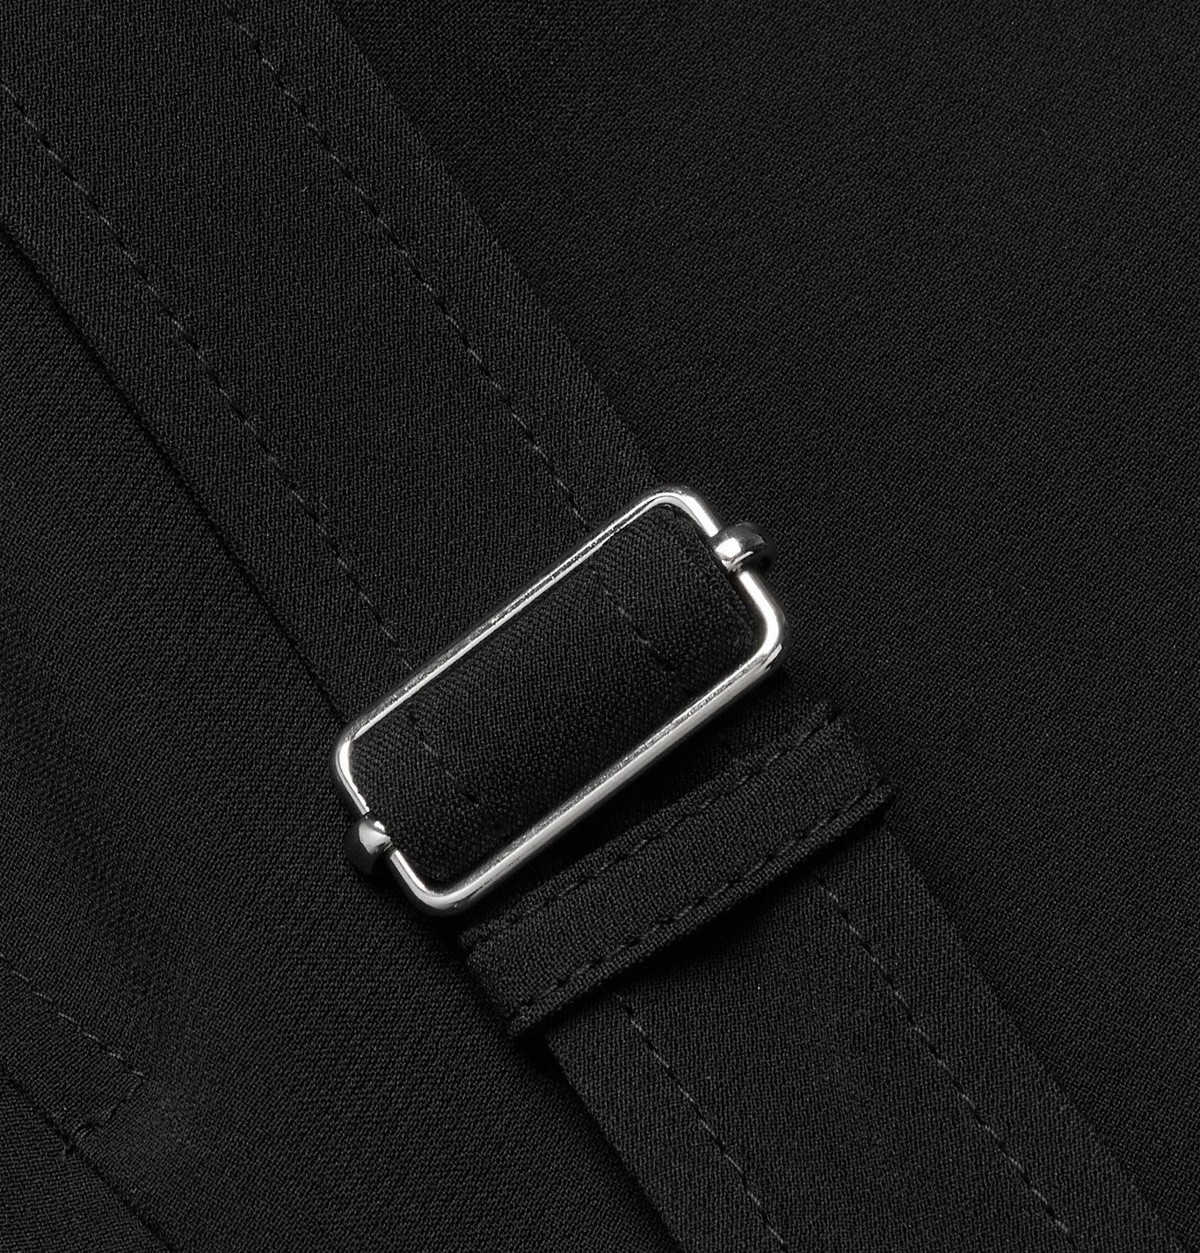 Alexander McQueen harness-detail Leather Denim Jacket - Blue